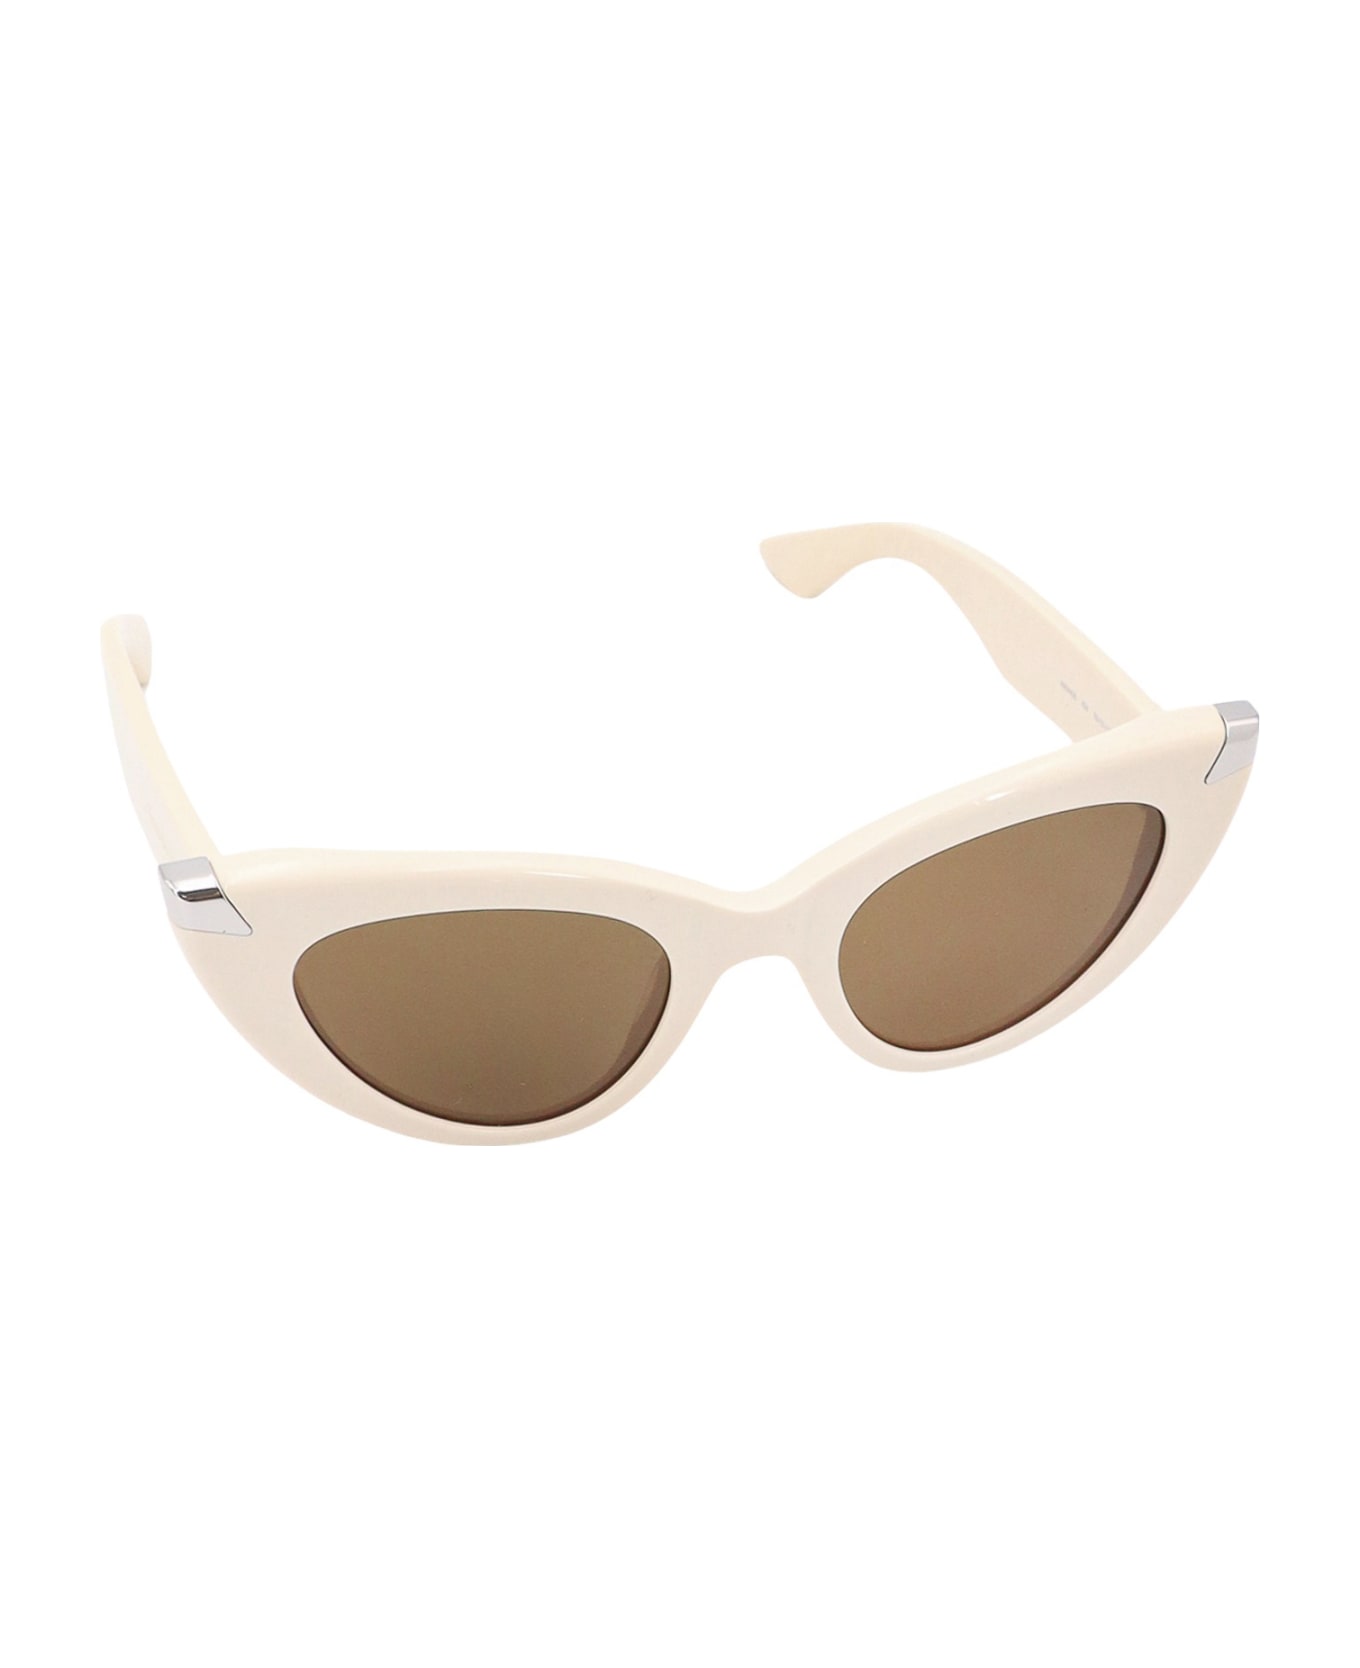 Alexander McQueen Punk Rivet Sunglasses - Beige